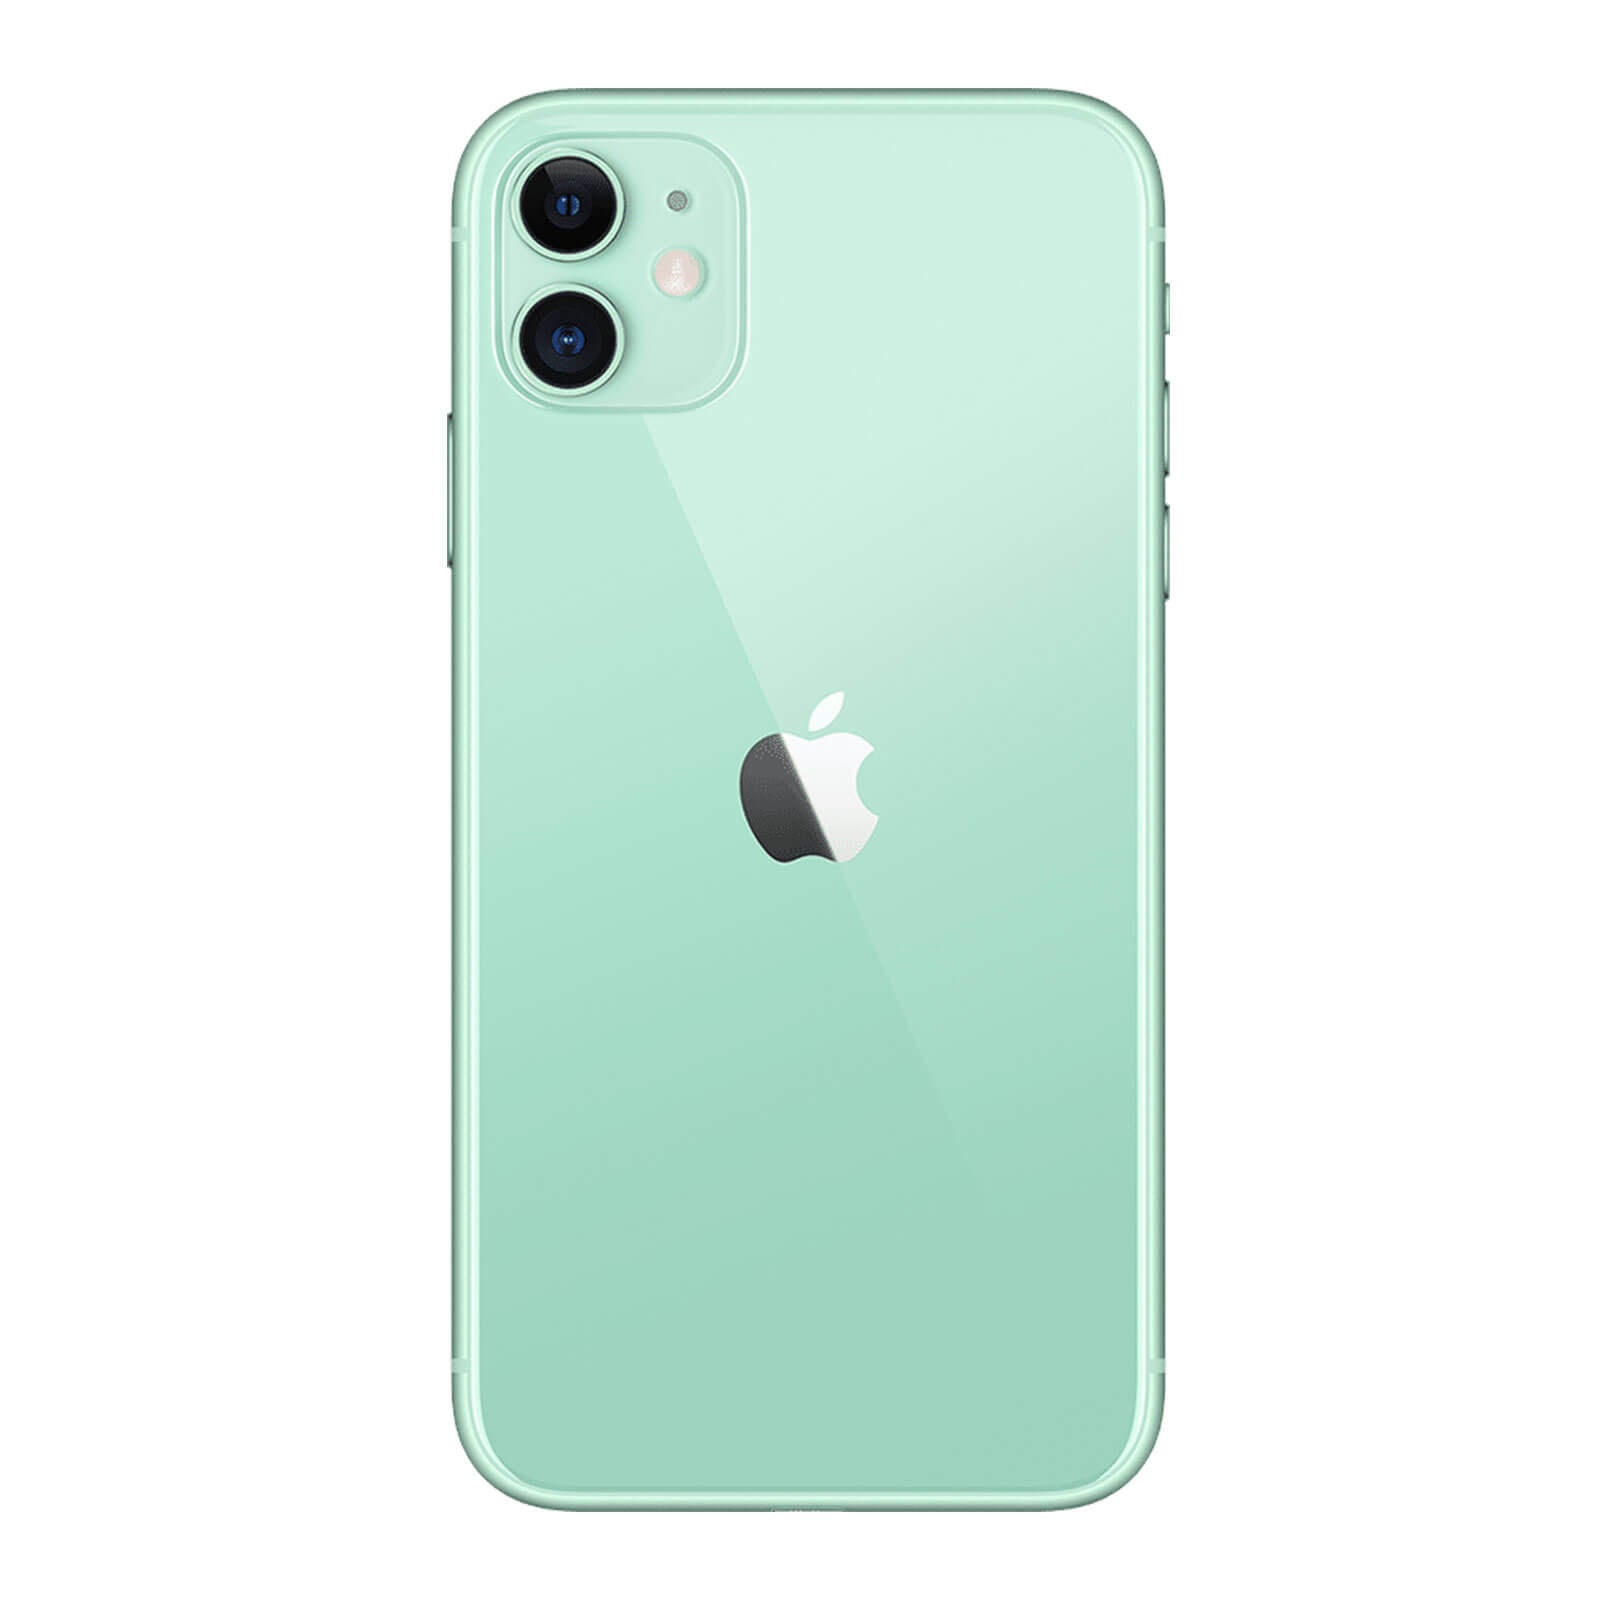 Apple iPhone 11 256GB Green Good - Verizon